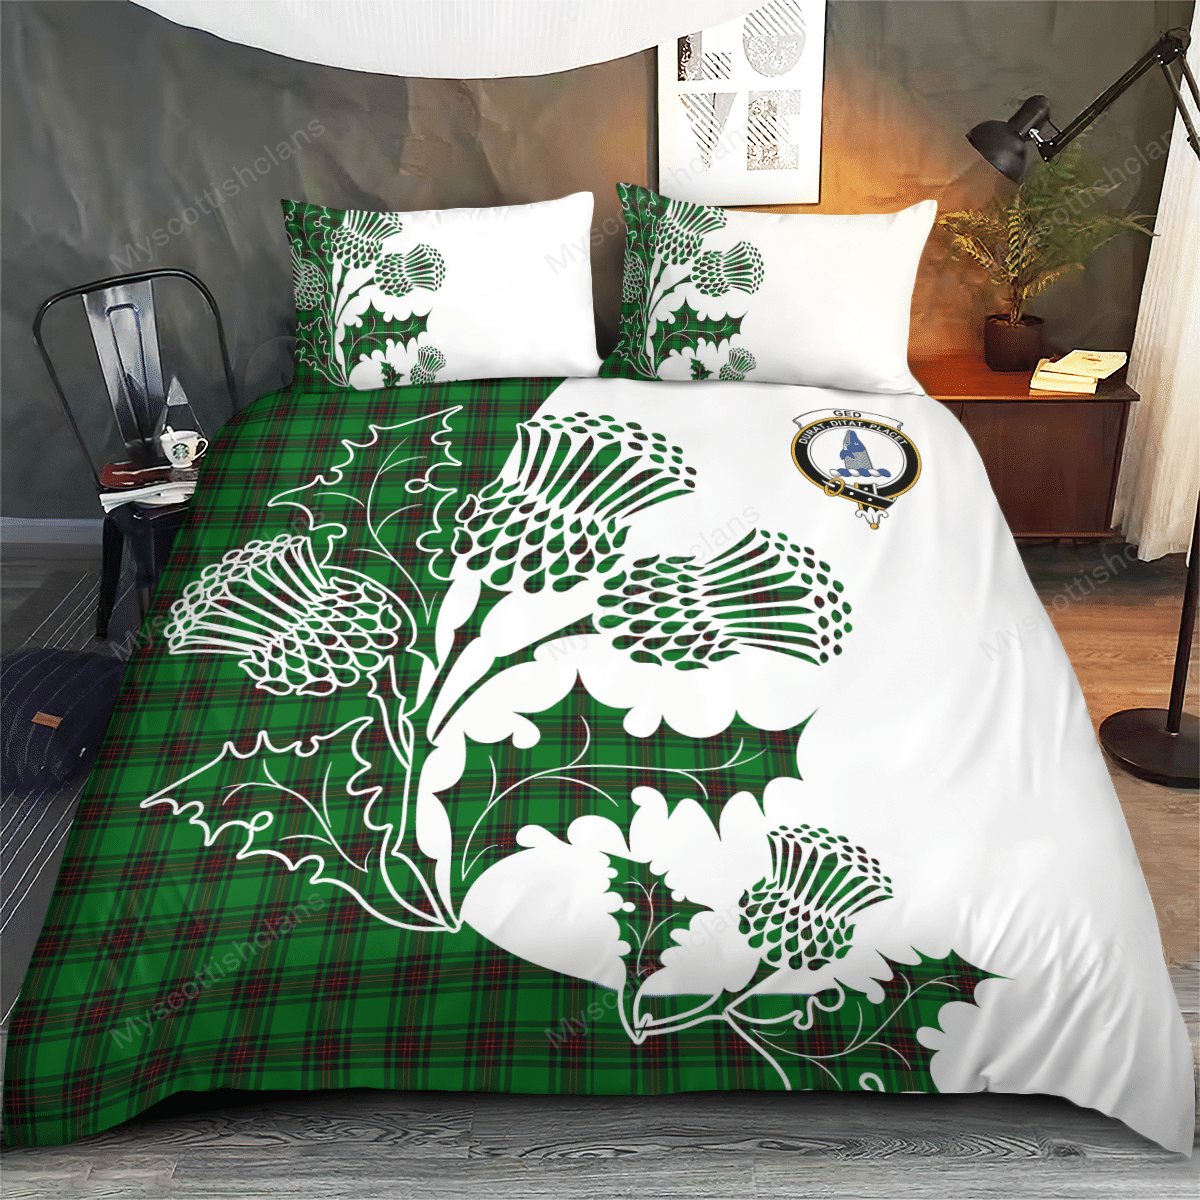 Ged Tartan Crest Bedding Set - Thistle Style